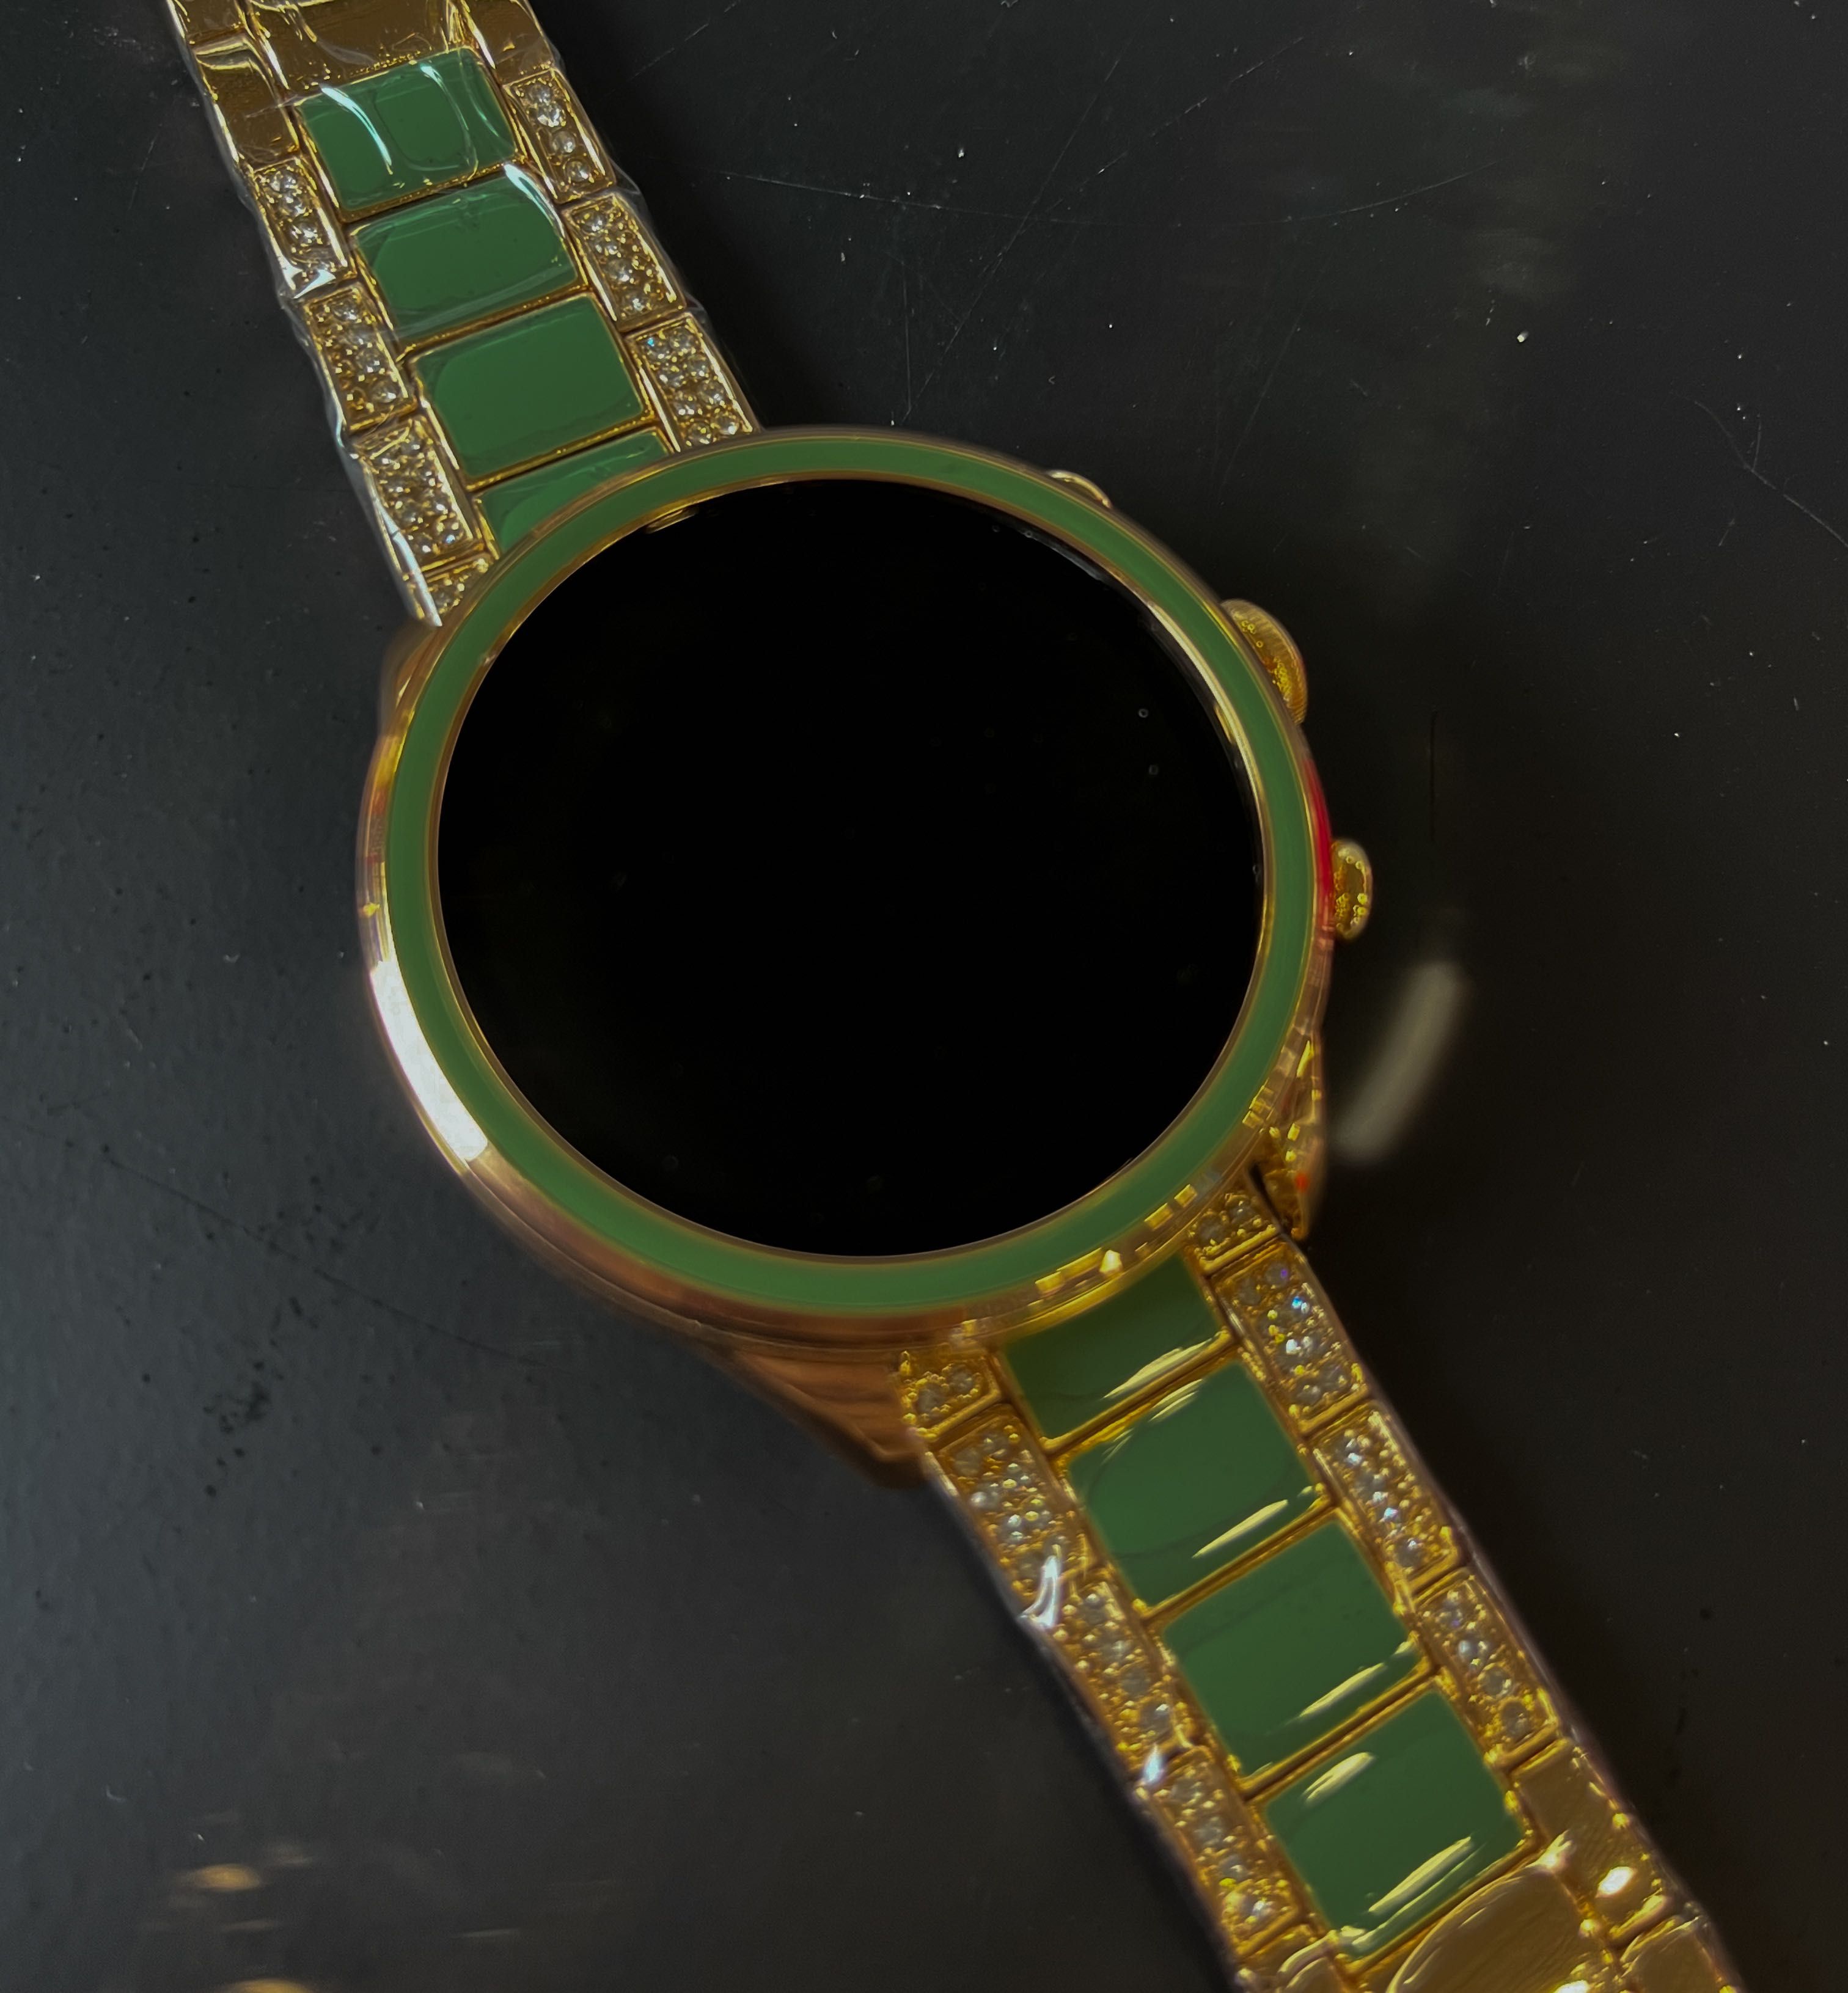 Smart Watch Умные наручные Часы GEN 11